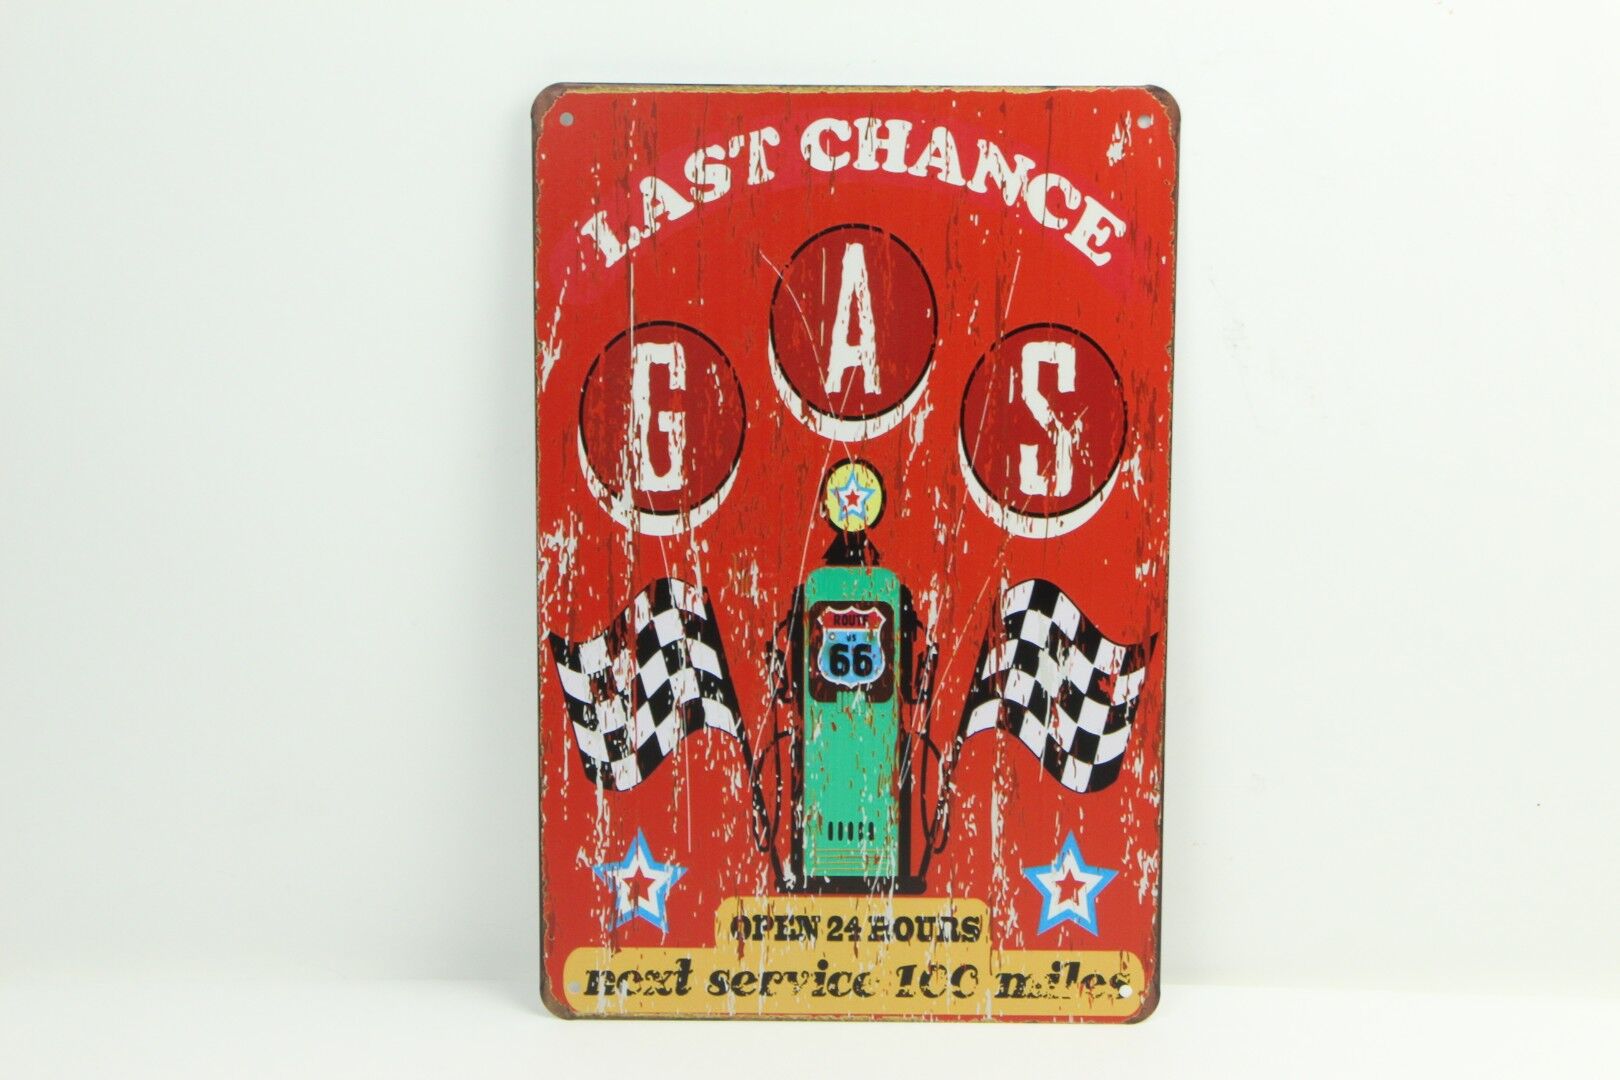 Табличка настенная "Last chance Next service 100 miles" 15612